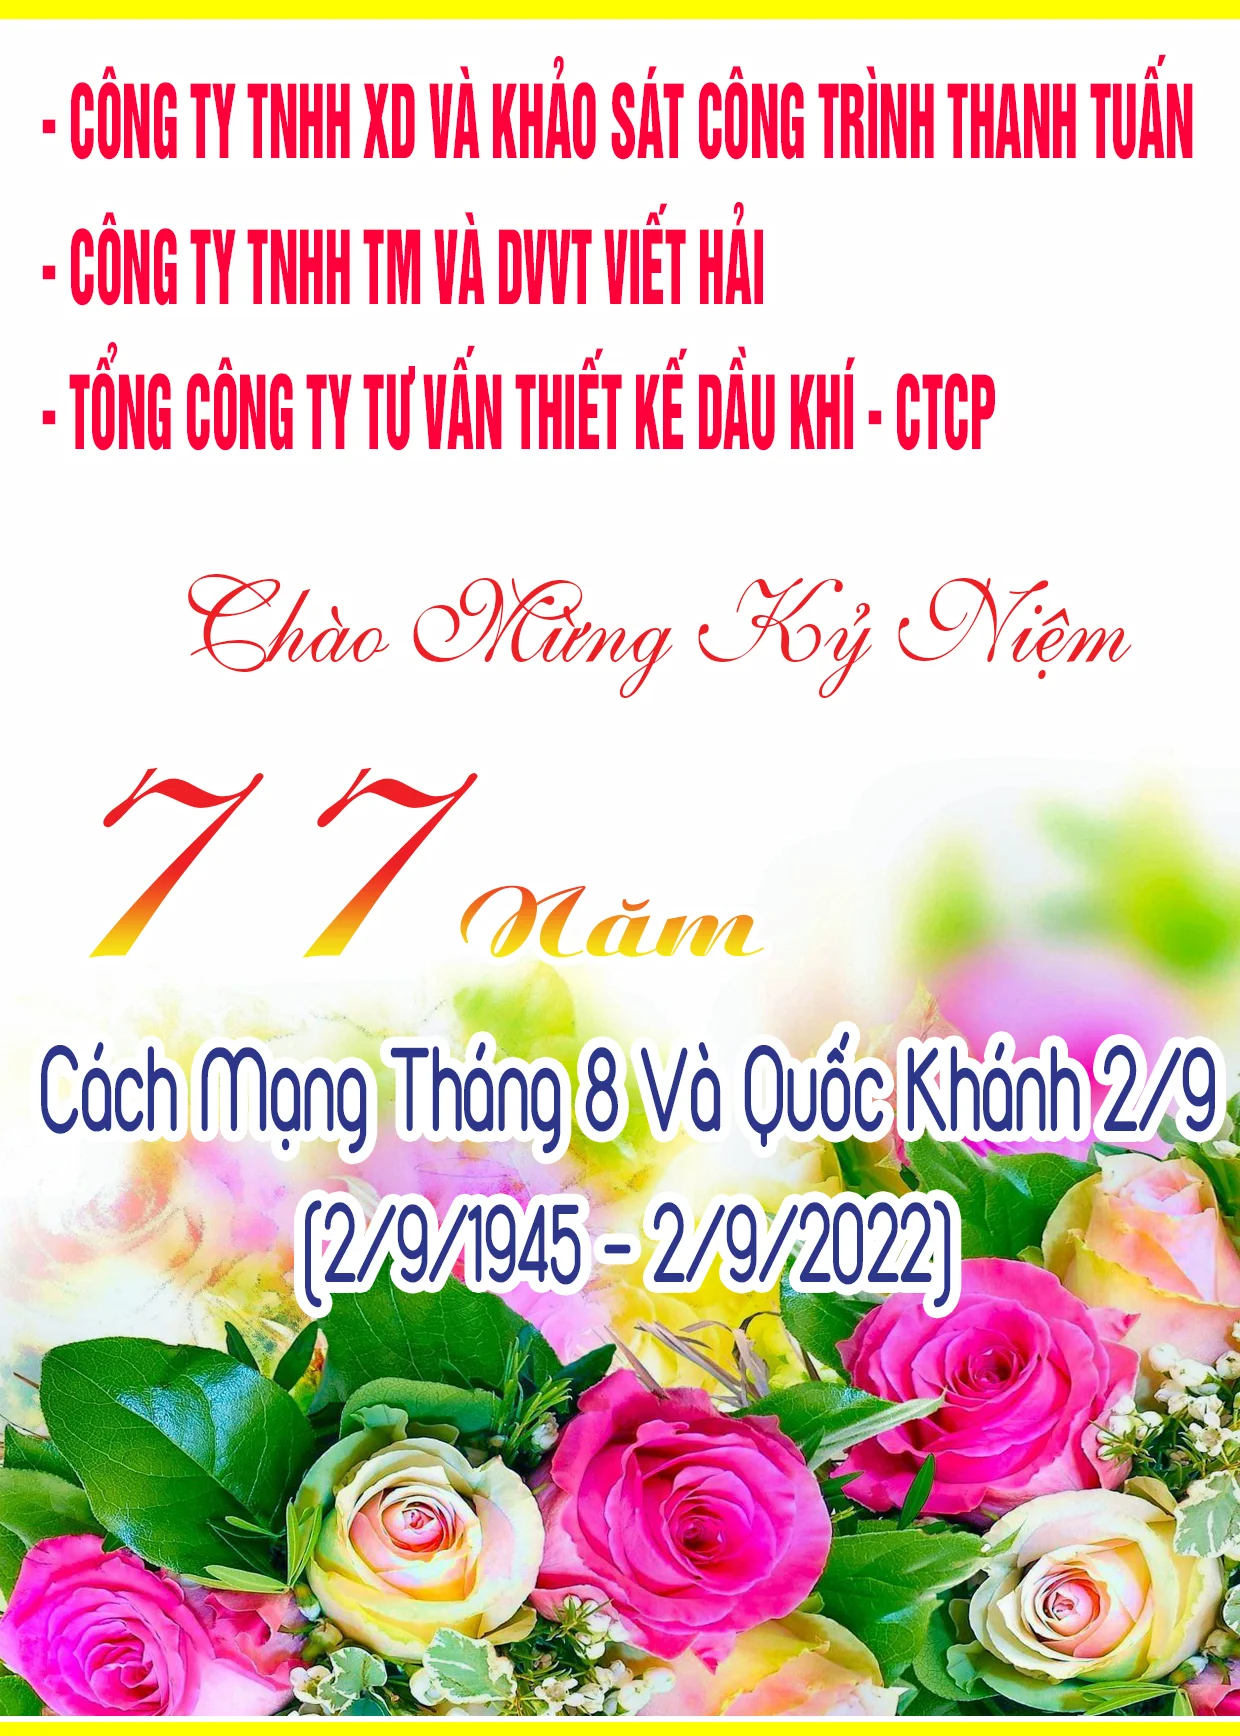 chao-mung-ky-niem-77-nam-cach-mang-thang-tam-va-quoc-khanh-29